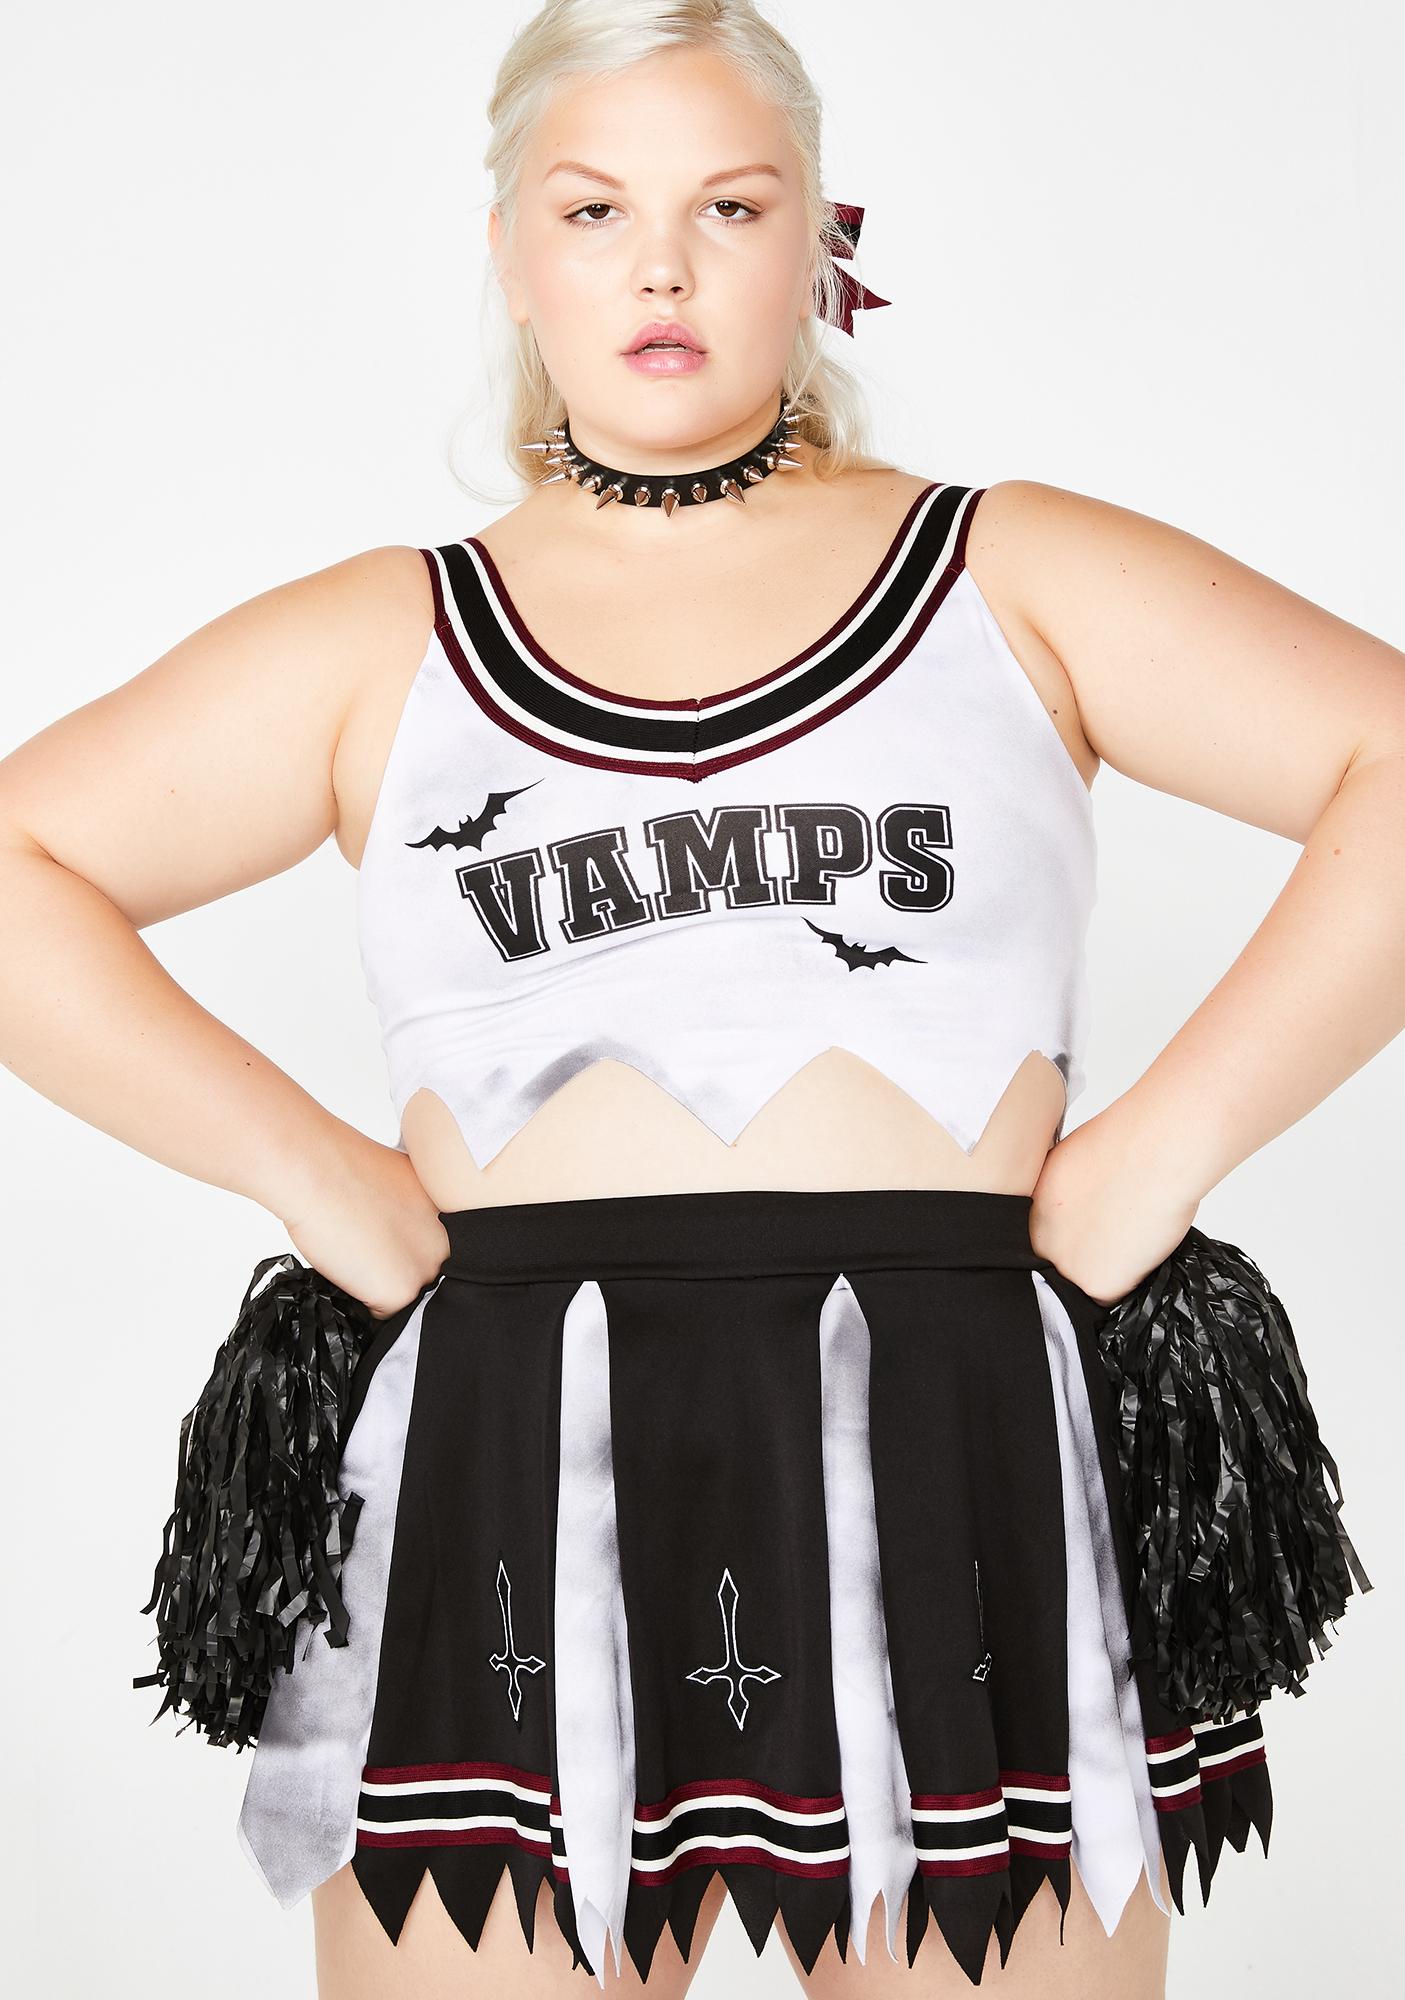 plus size cheerleader costume - www.gbwebsites.com.